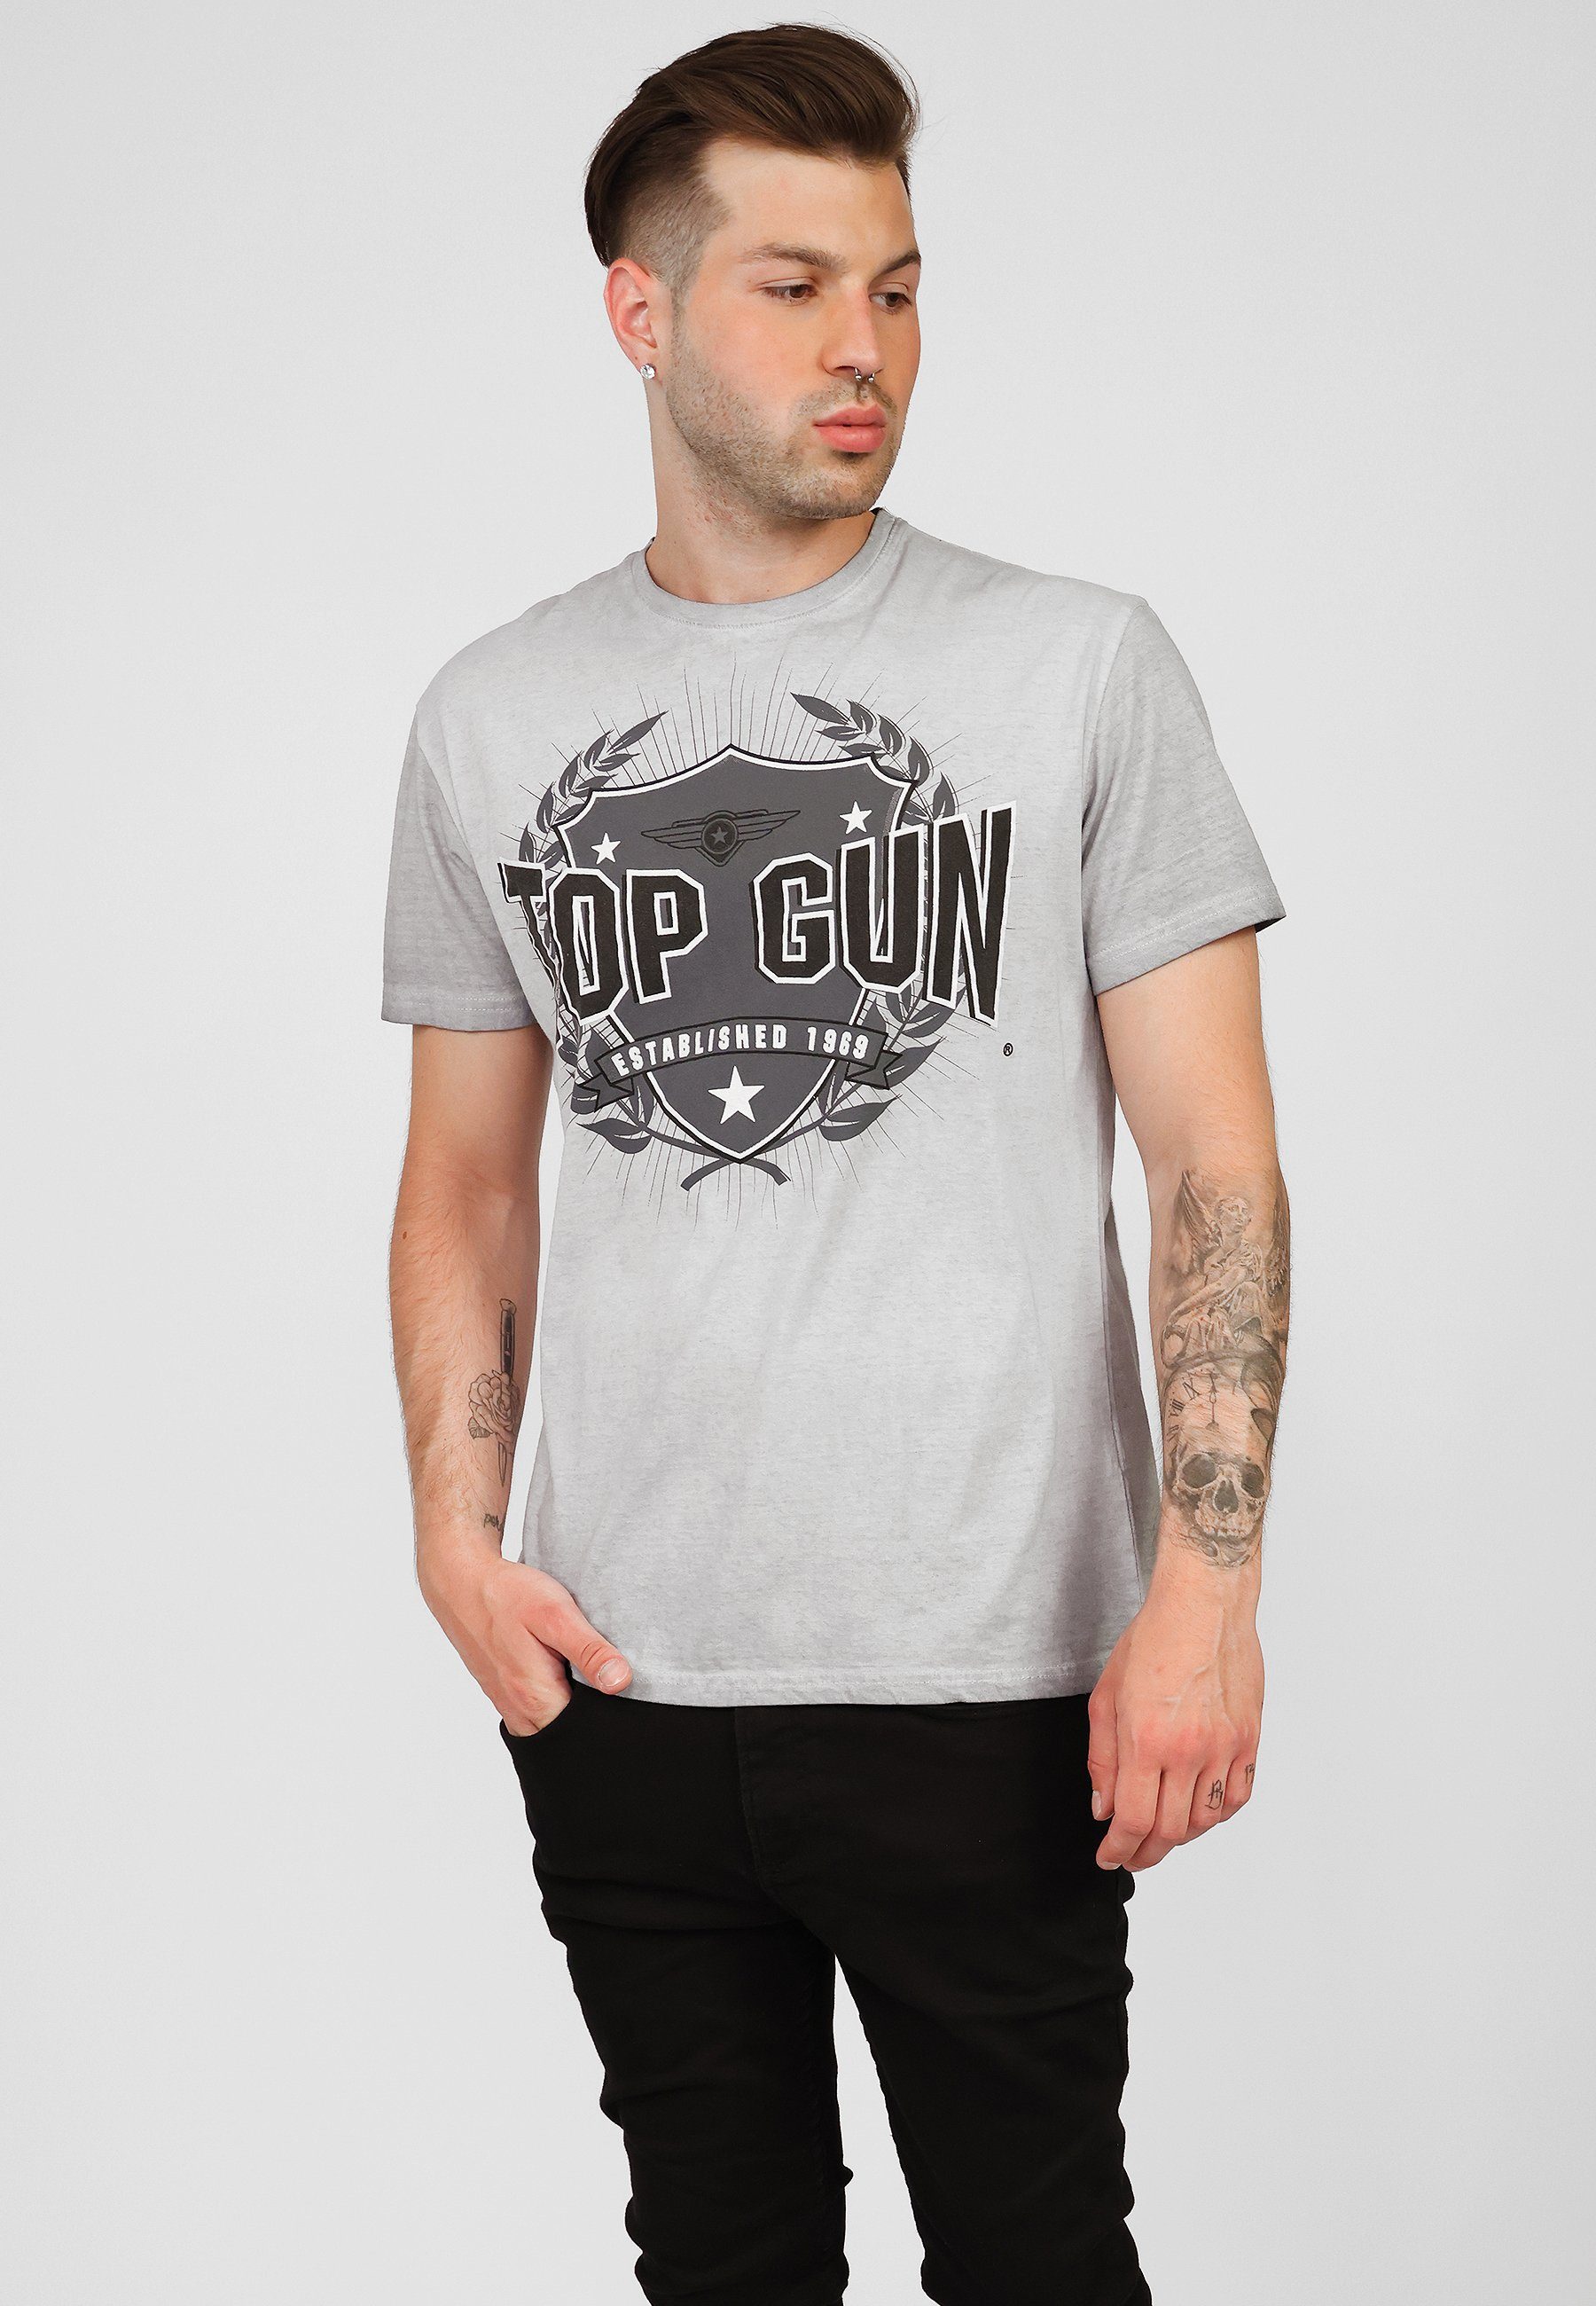 T-Shirt TOP grey TG20212104 light GUN